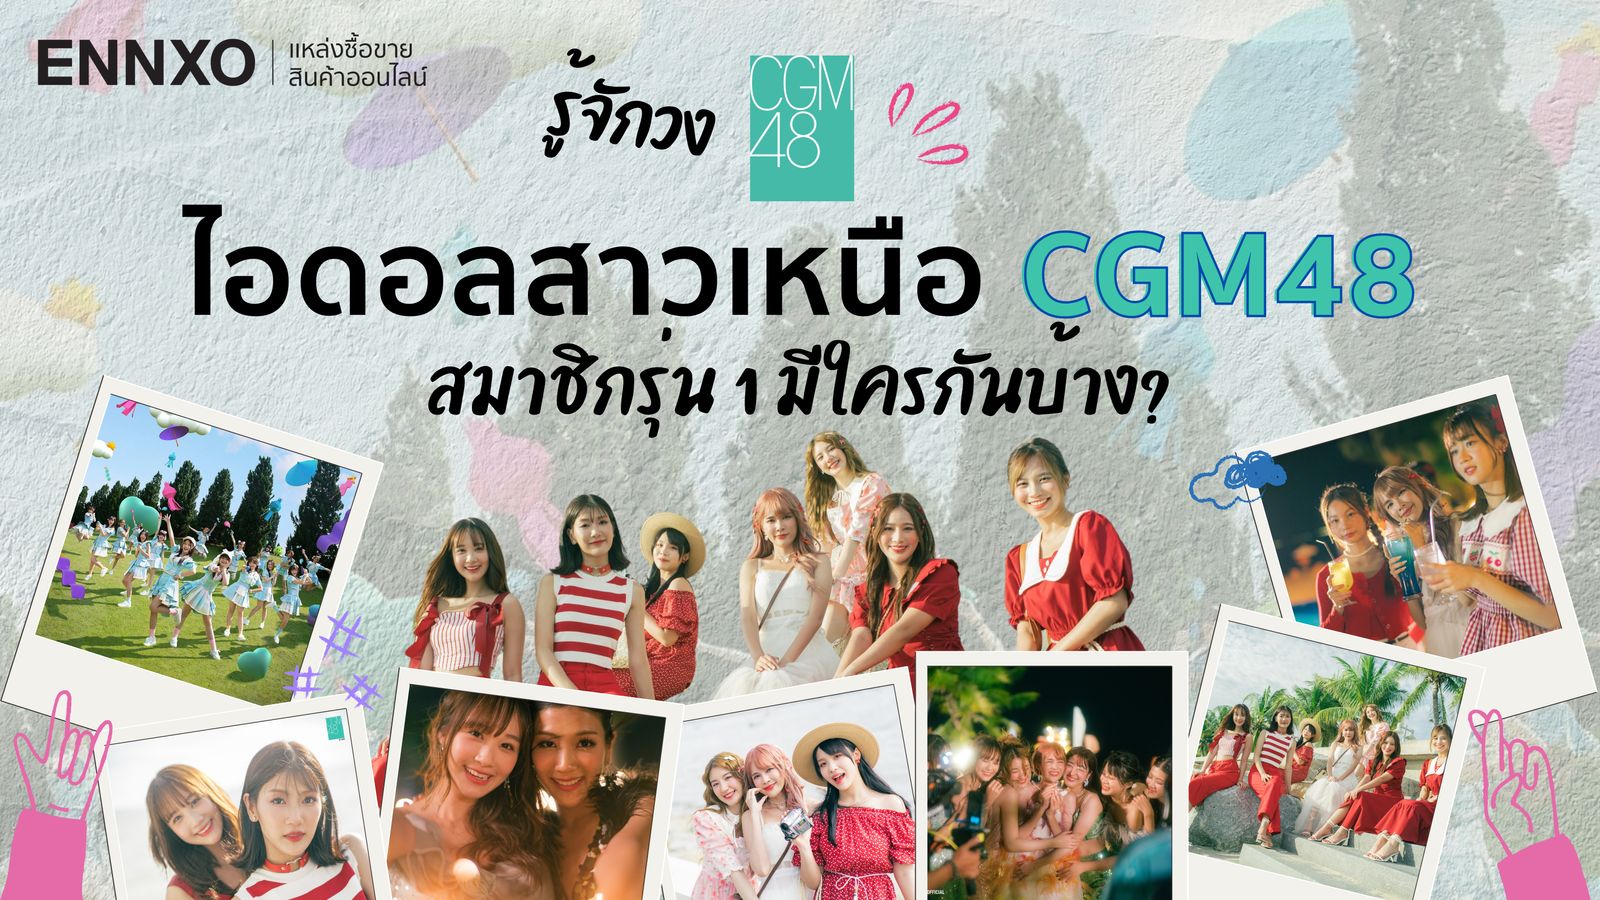 cgm48 1st generation